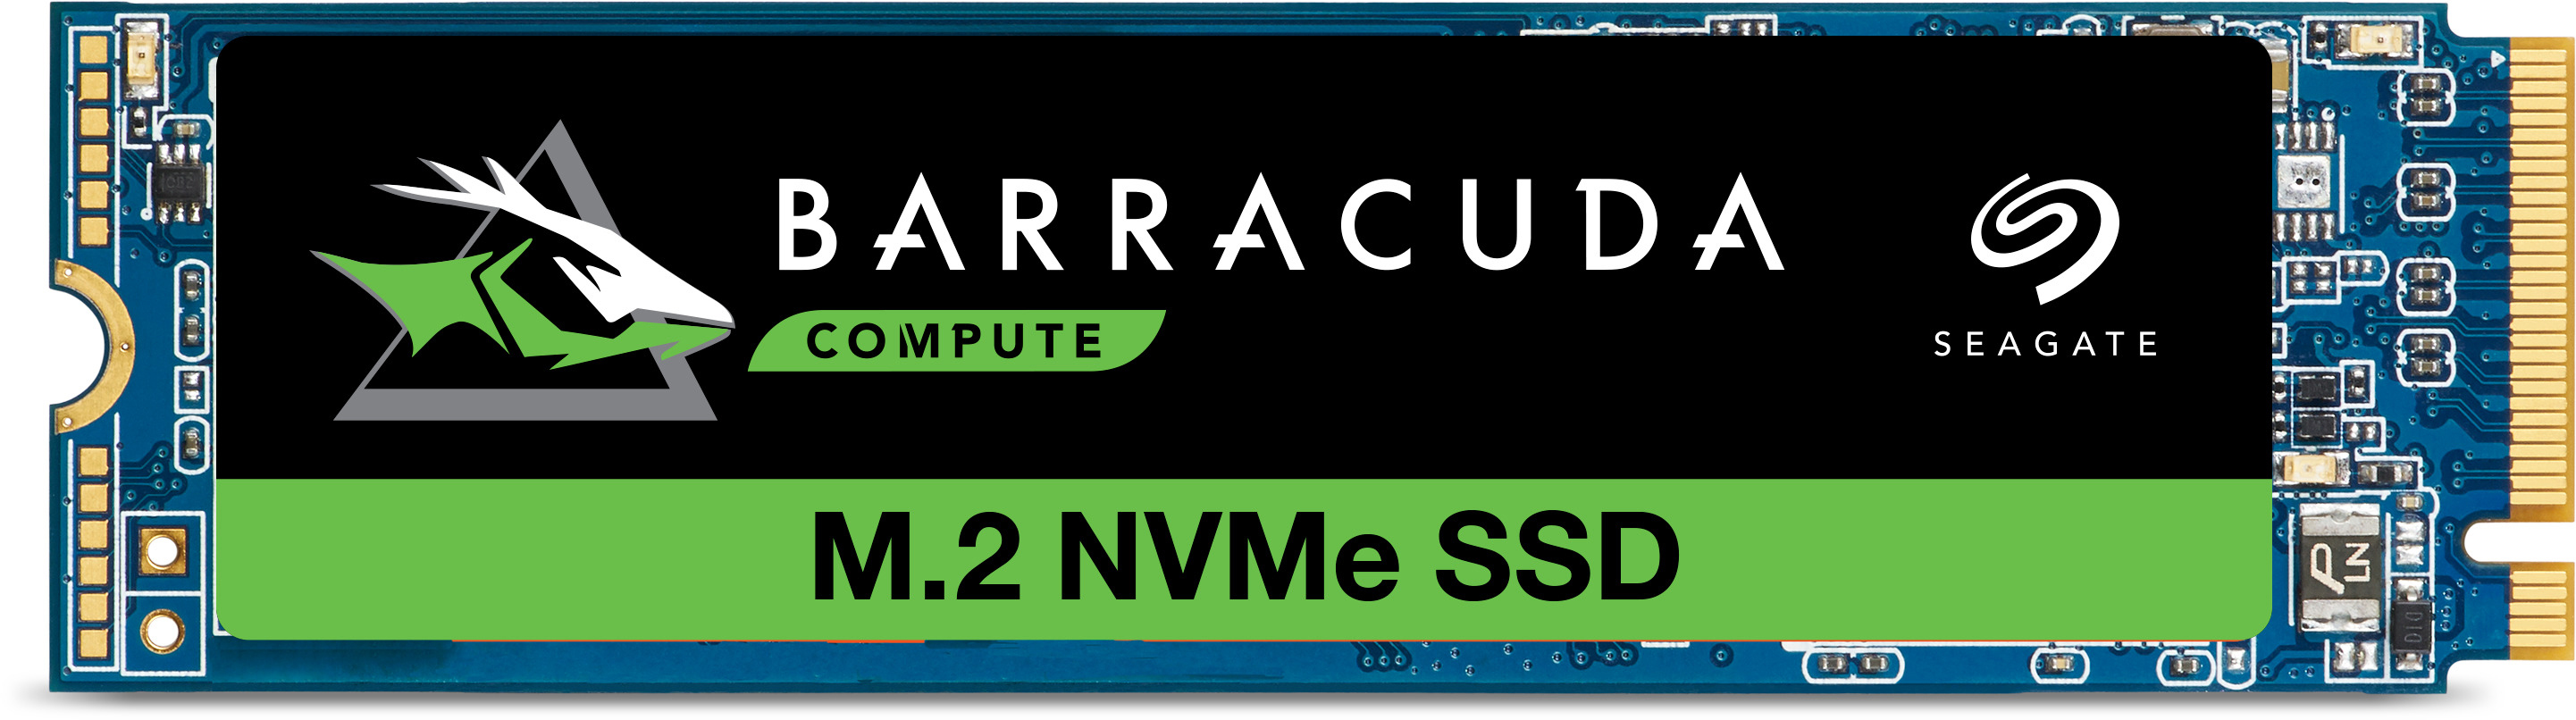 Flash BarraCuda intern Express, TB PCI Festplatte 1 SSD, NAND Retail, SEAGATE